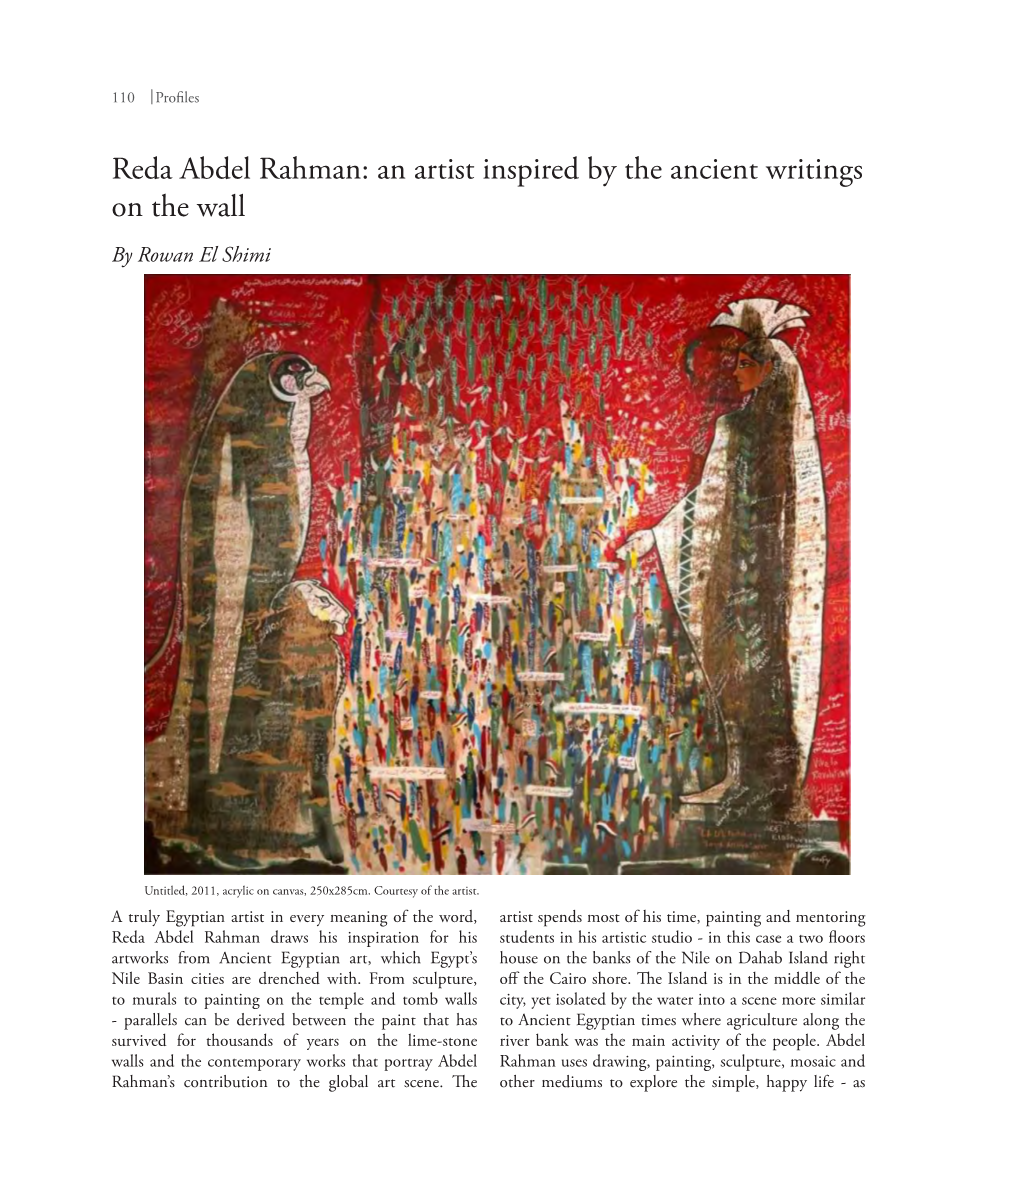 Reda Abdel Rahman: an Artist Inspired by the Ancient Writings on the Wall by Rowan El Shimi